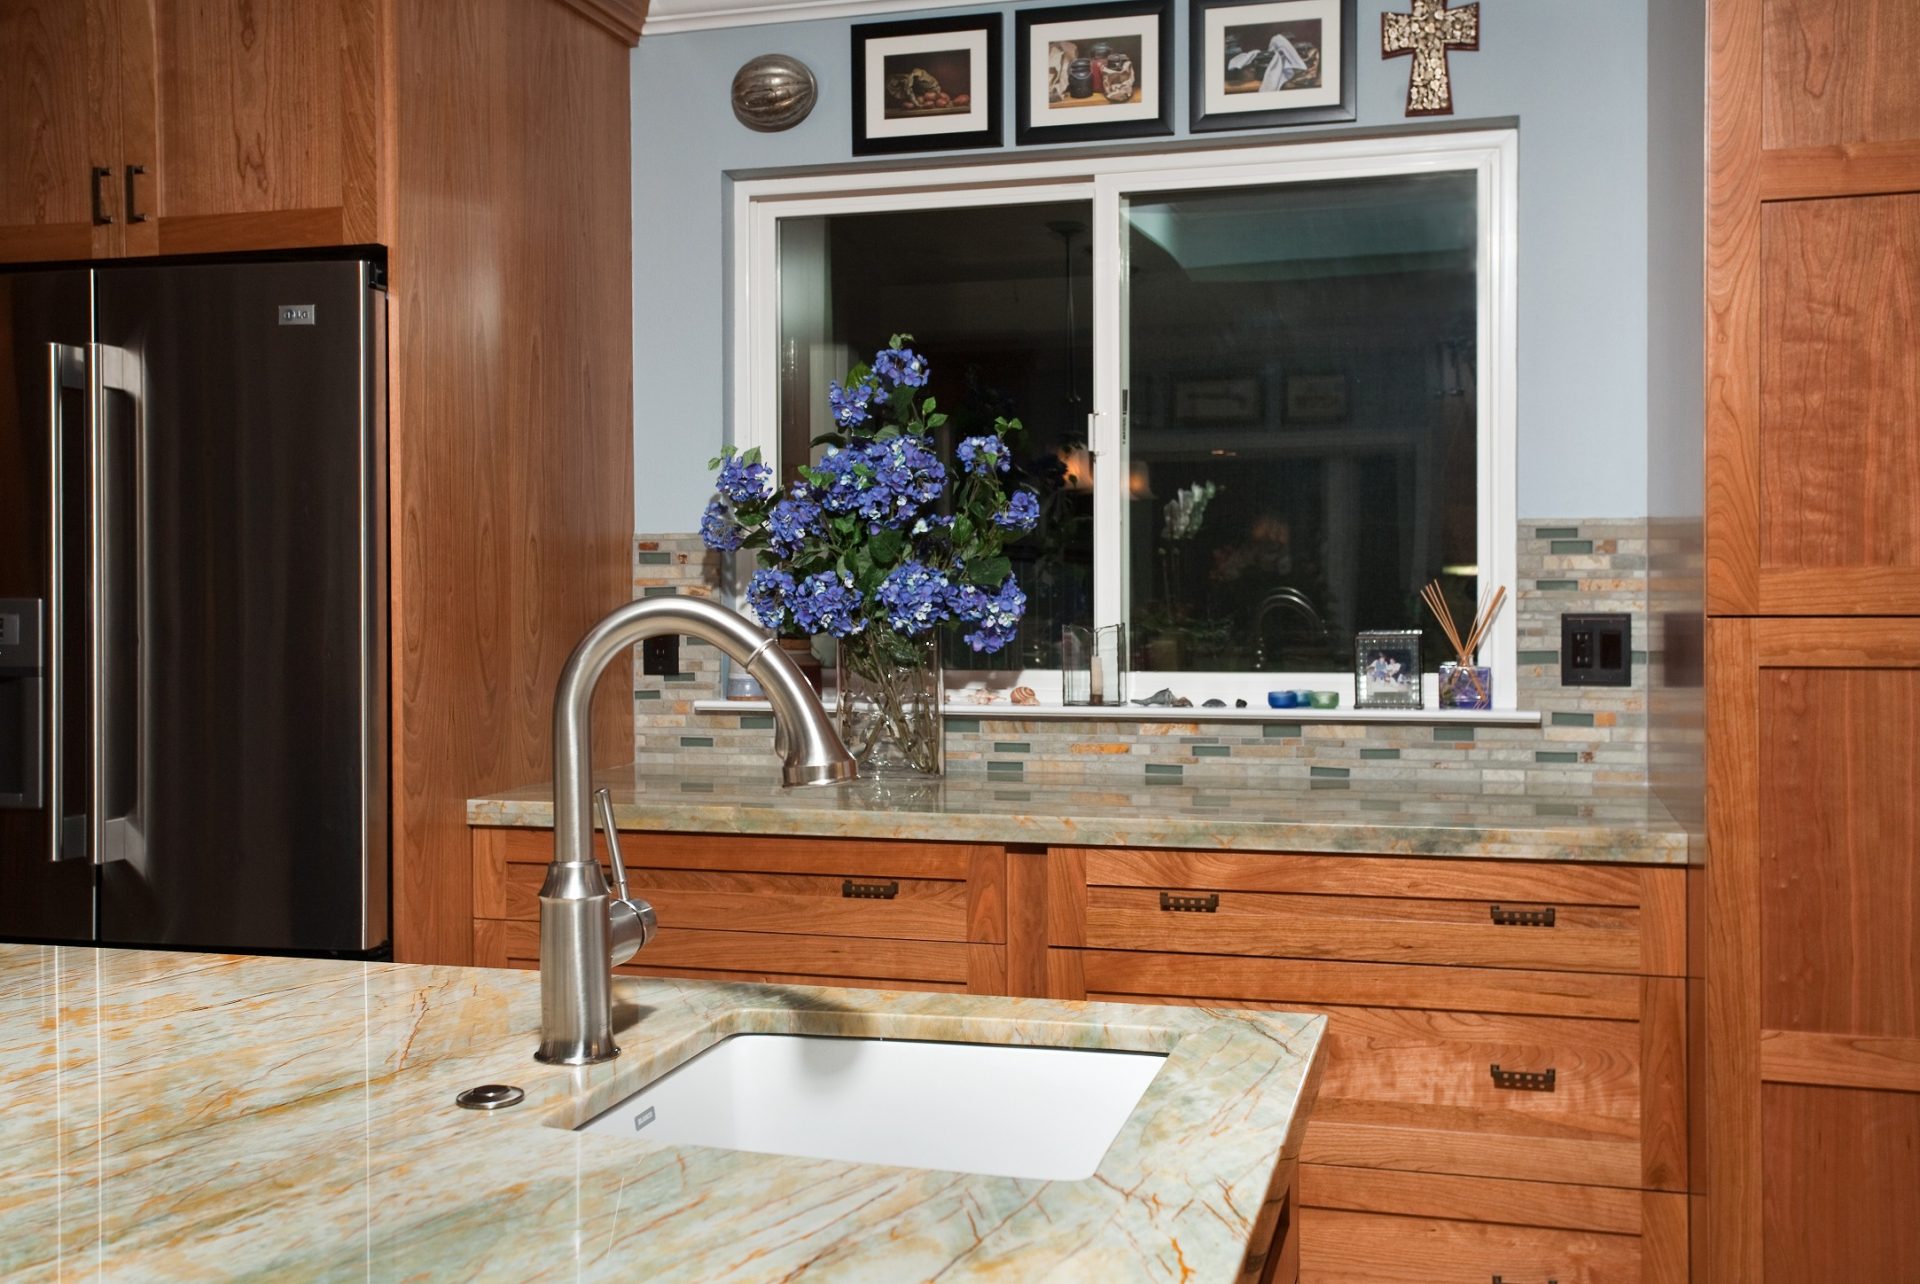 Sunnyvale Kitchen Island Prep Sink OK E1469730947366 